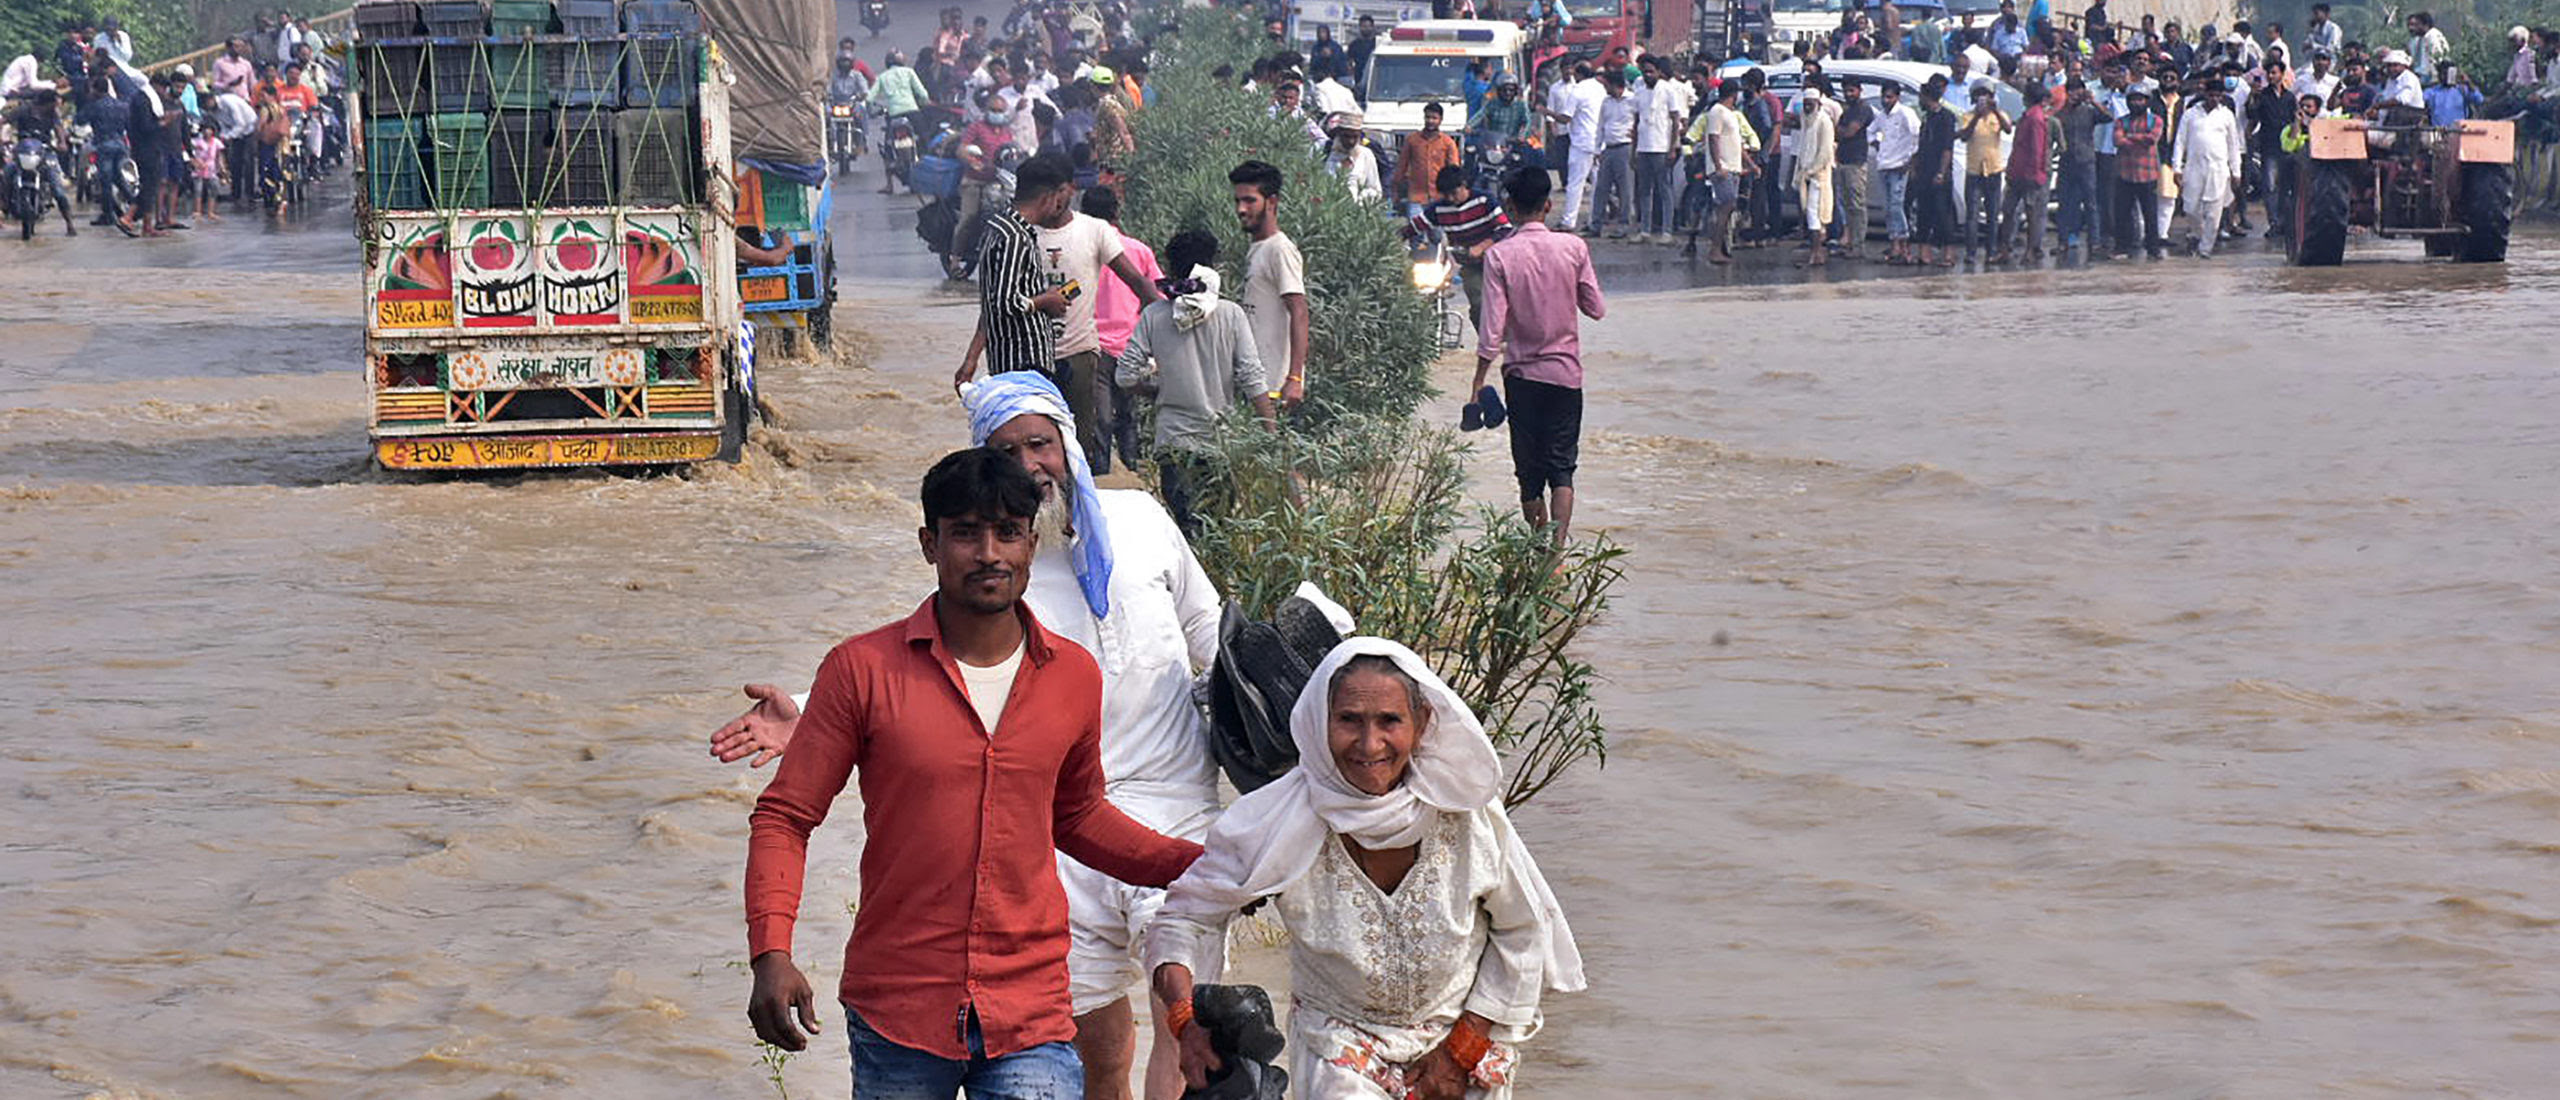 Over 100 People Dead, Dozens Still Missing As Floods Ravage Nepal